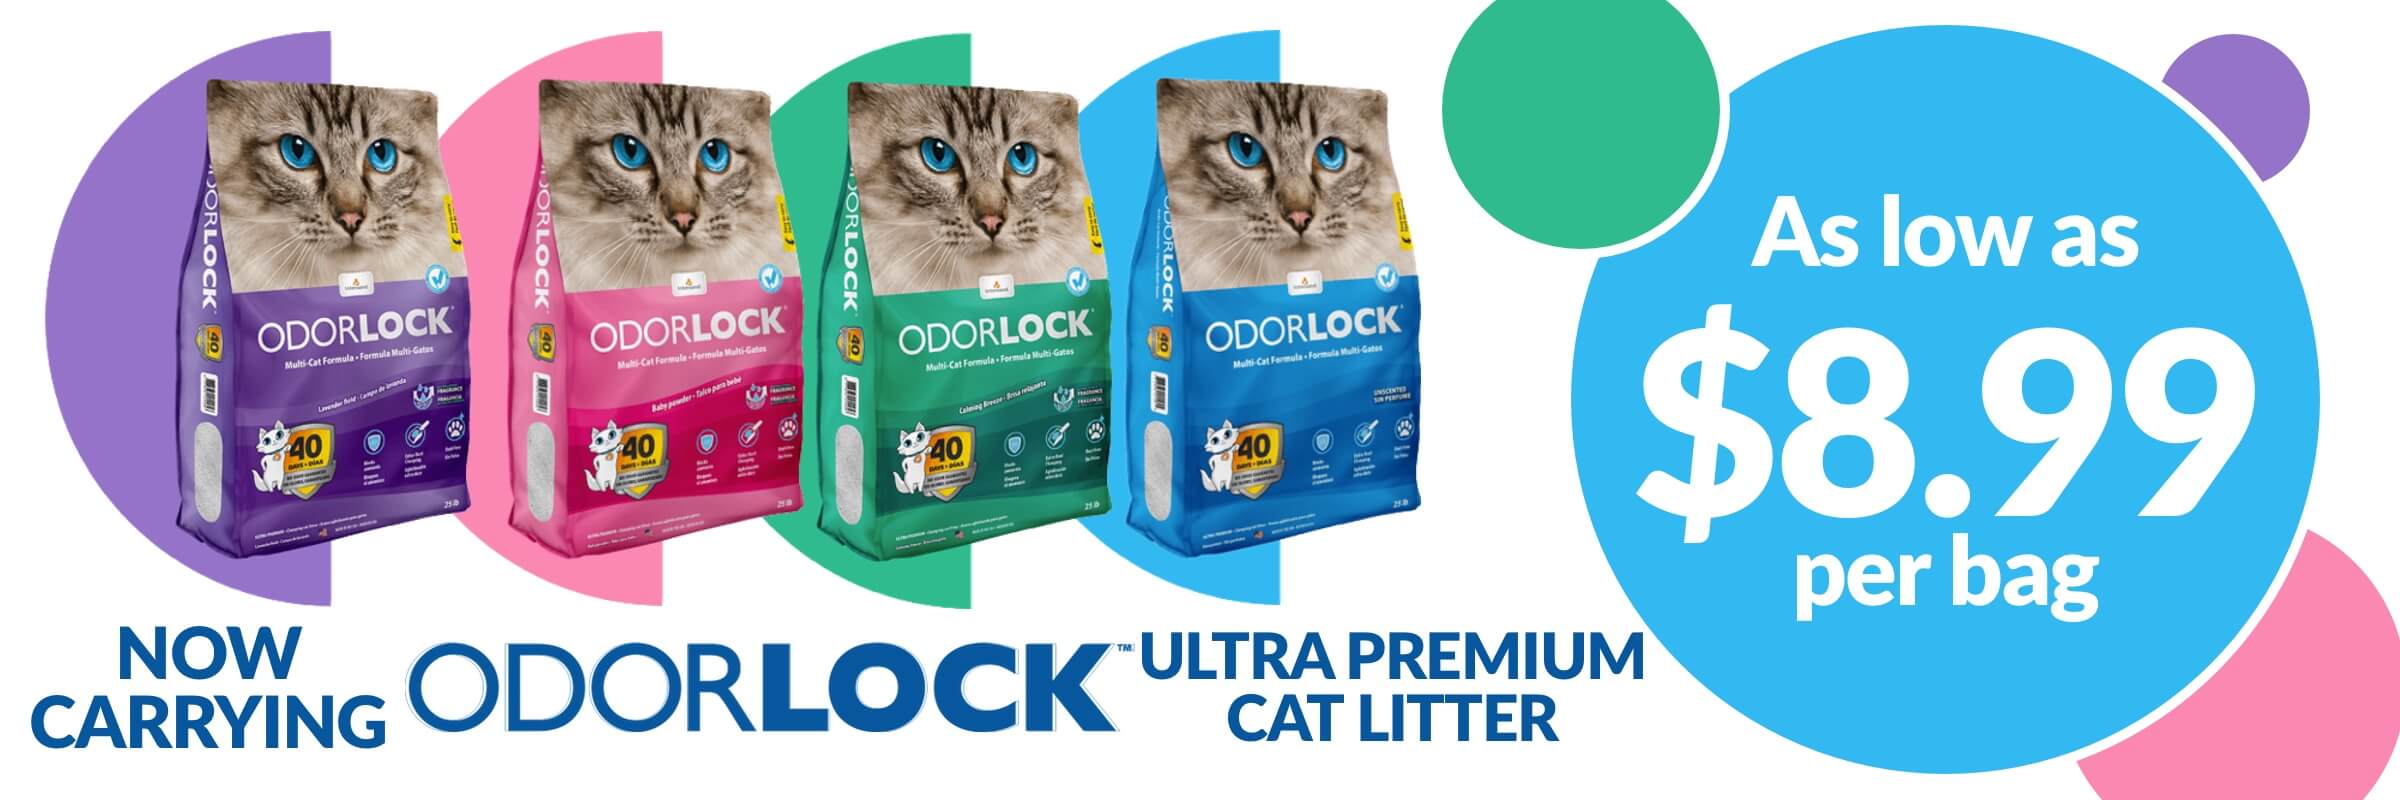 Now Carrying Odorlock Ultra Premium Cat Litter Starting at $8.99